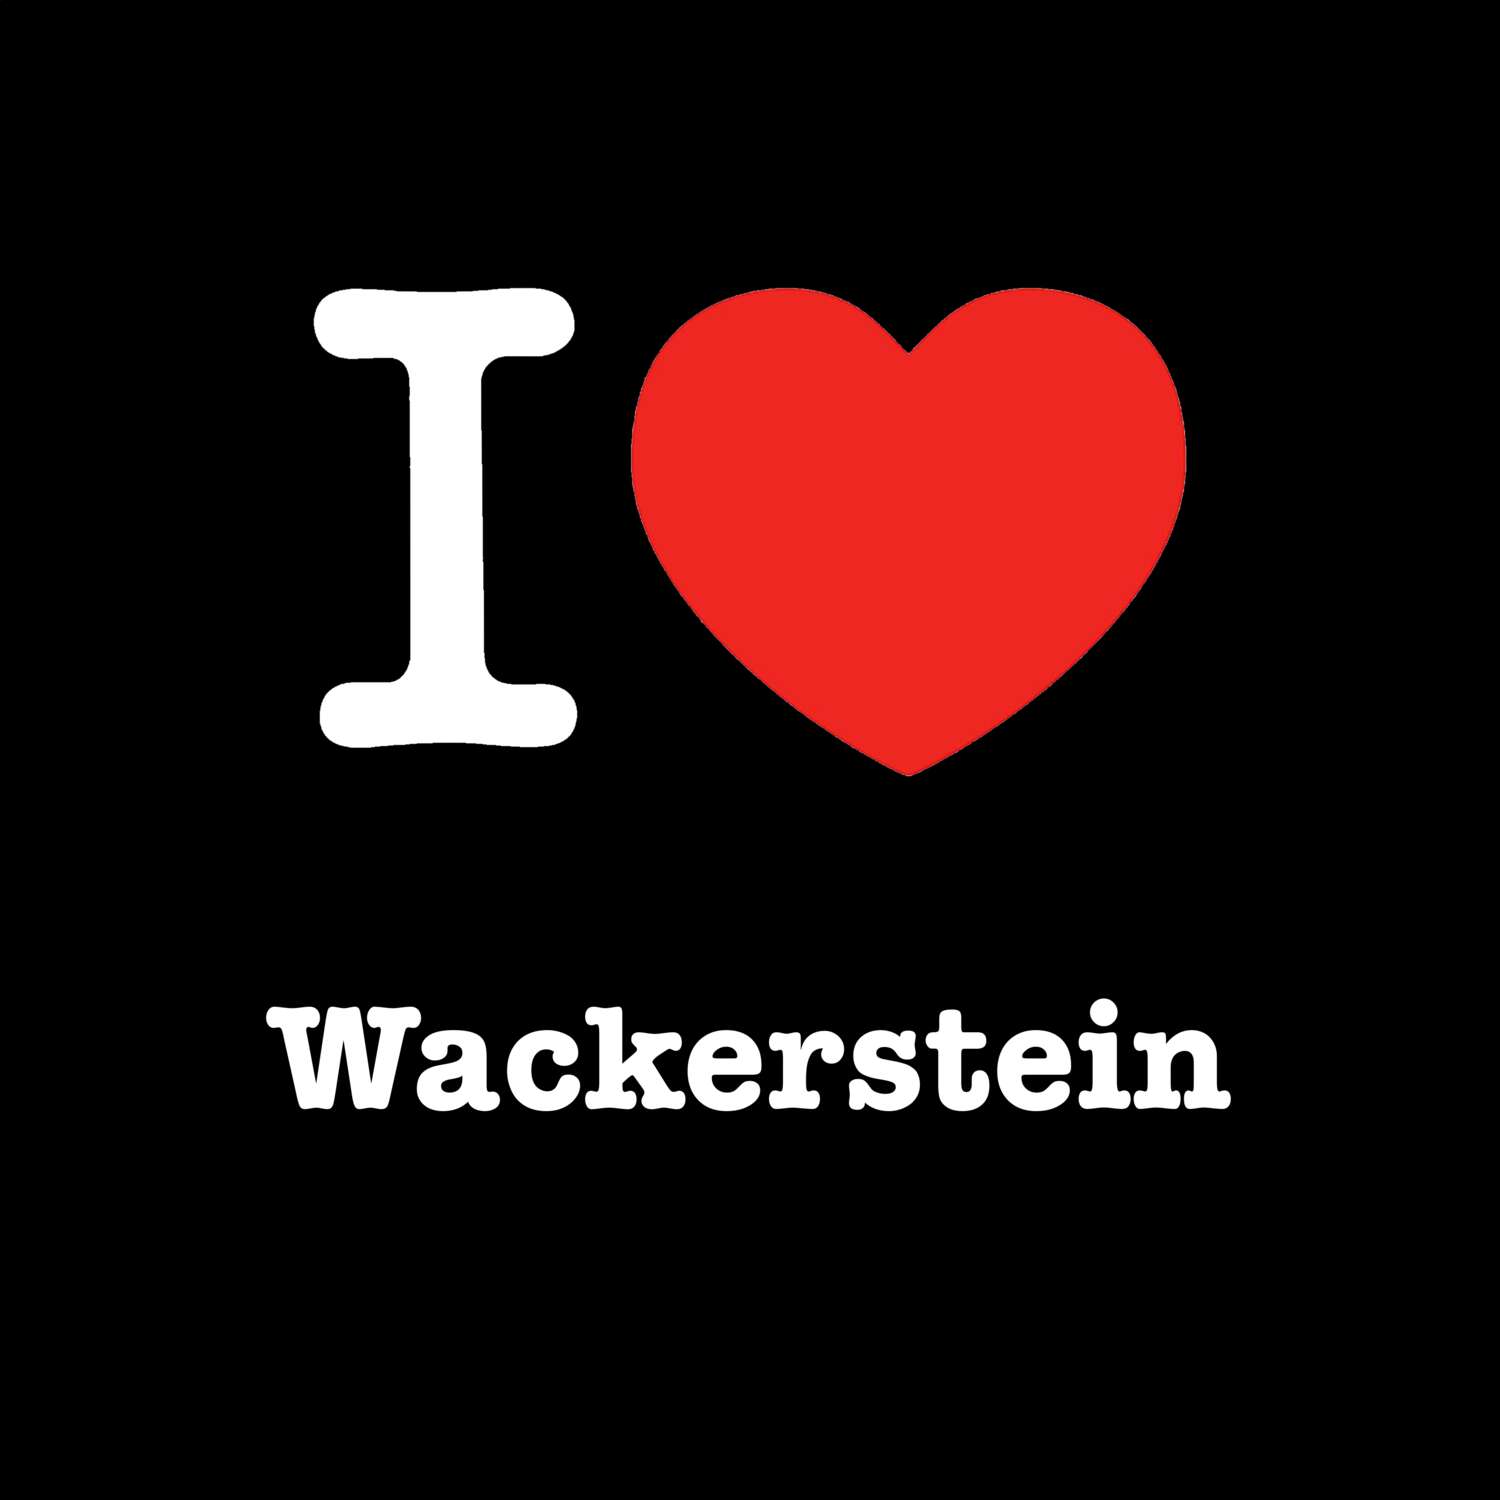 Wackerstein T-Shirt »I love«